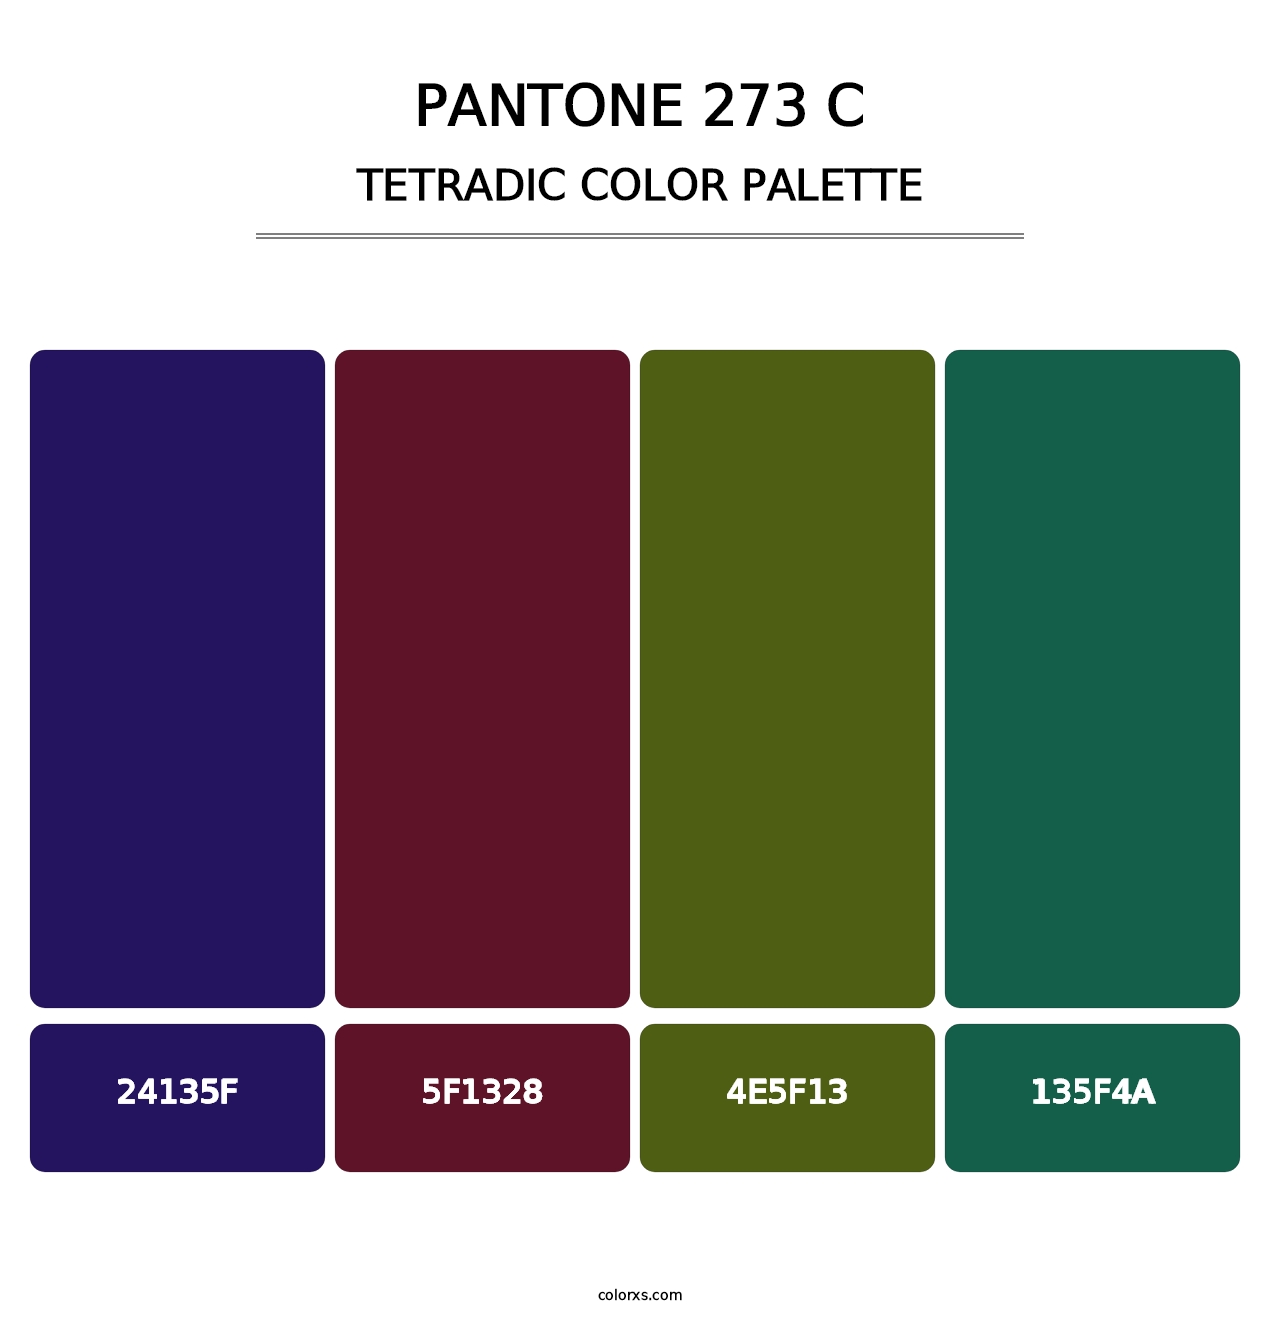 PANTONE 273 C - Tetradic Color Palette